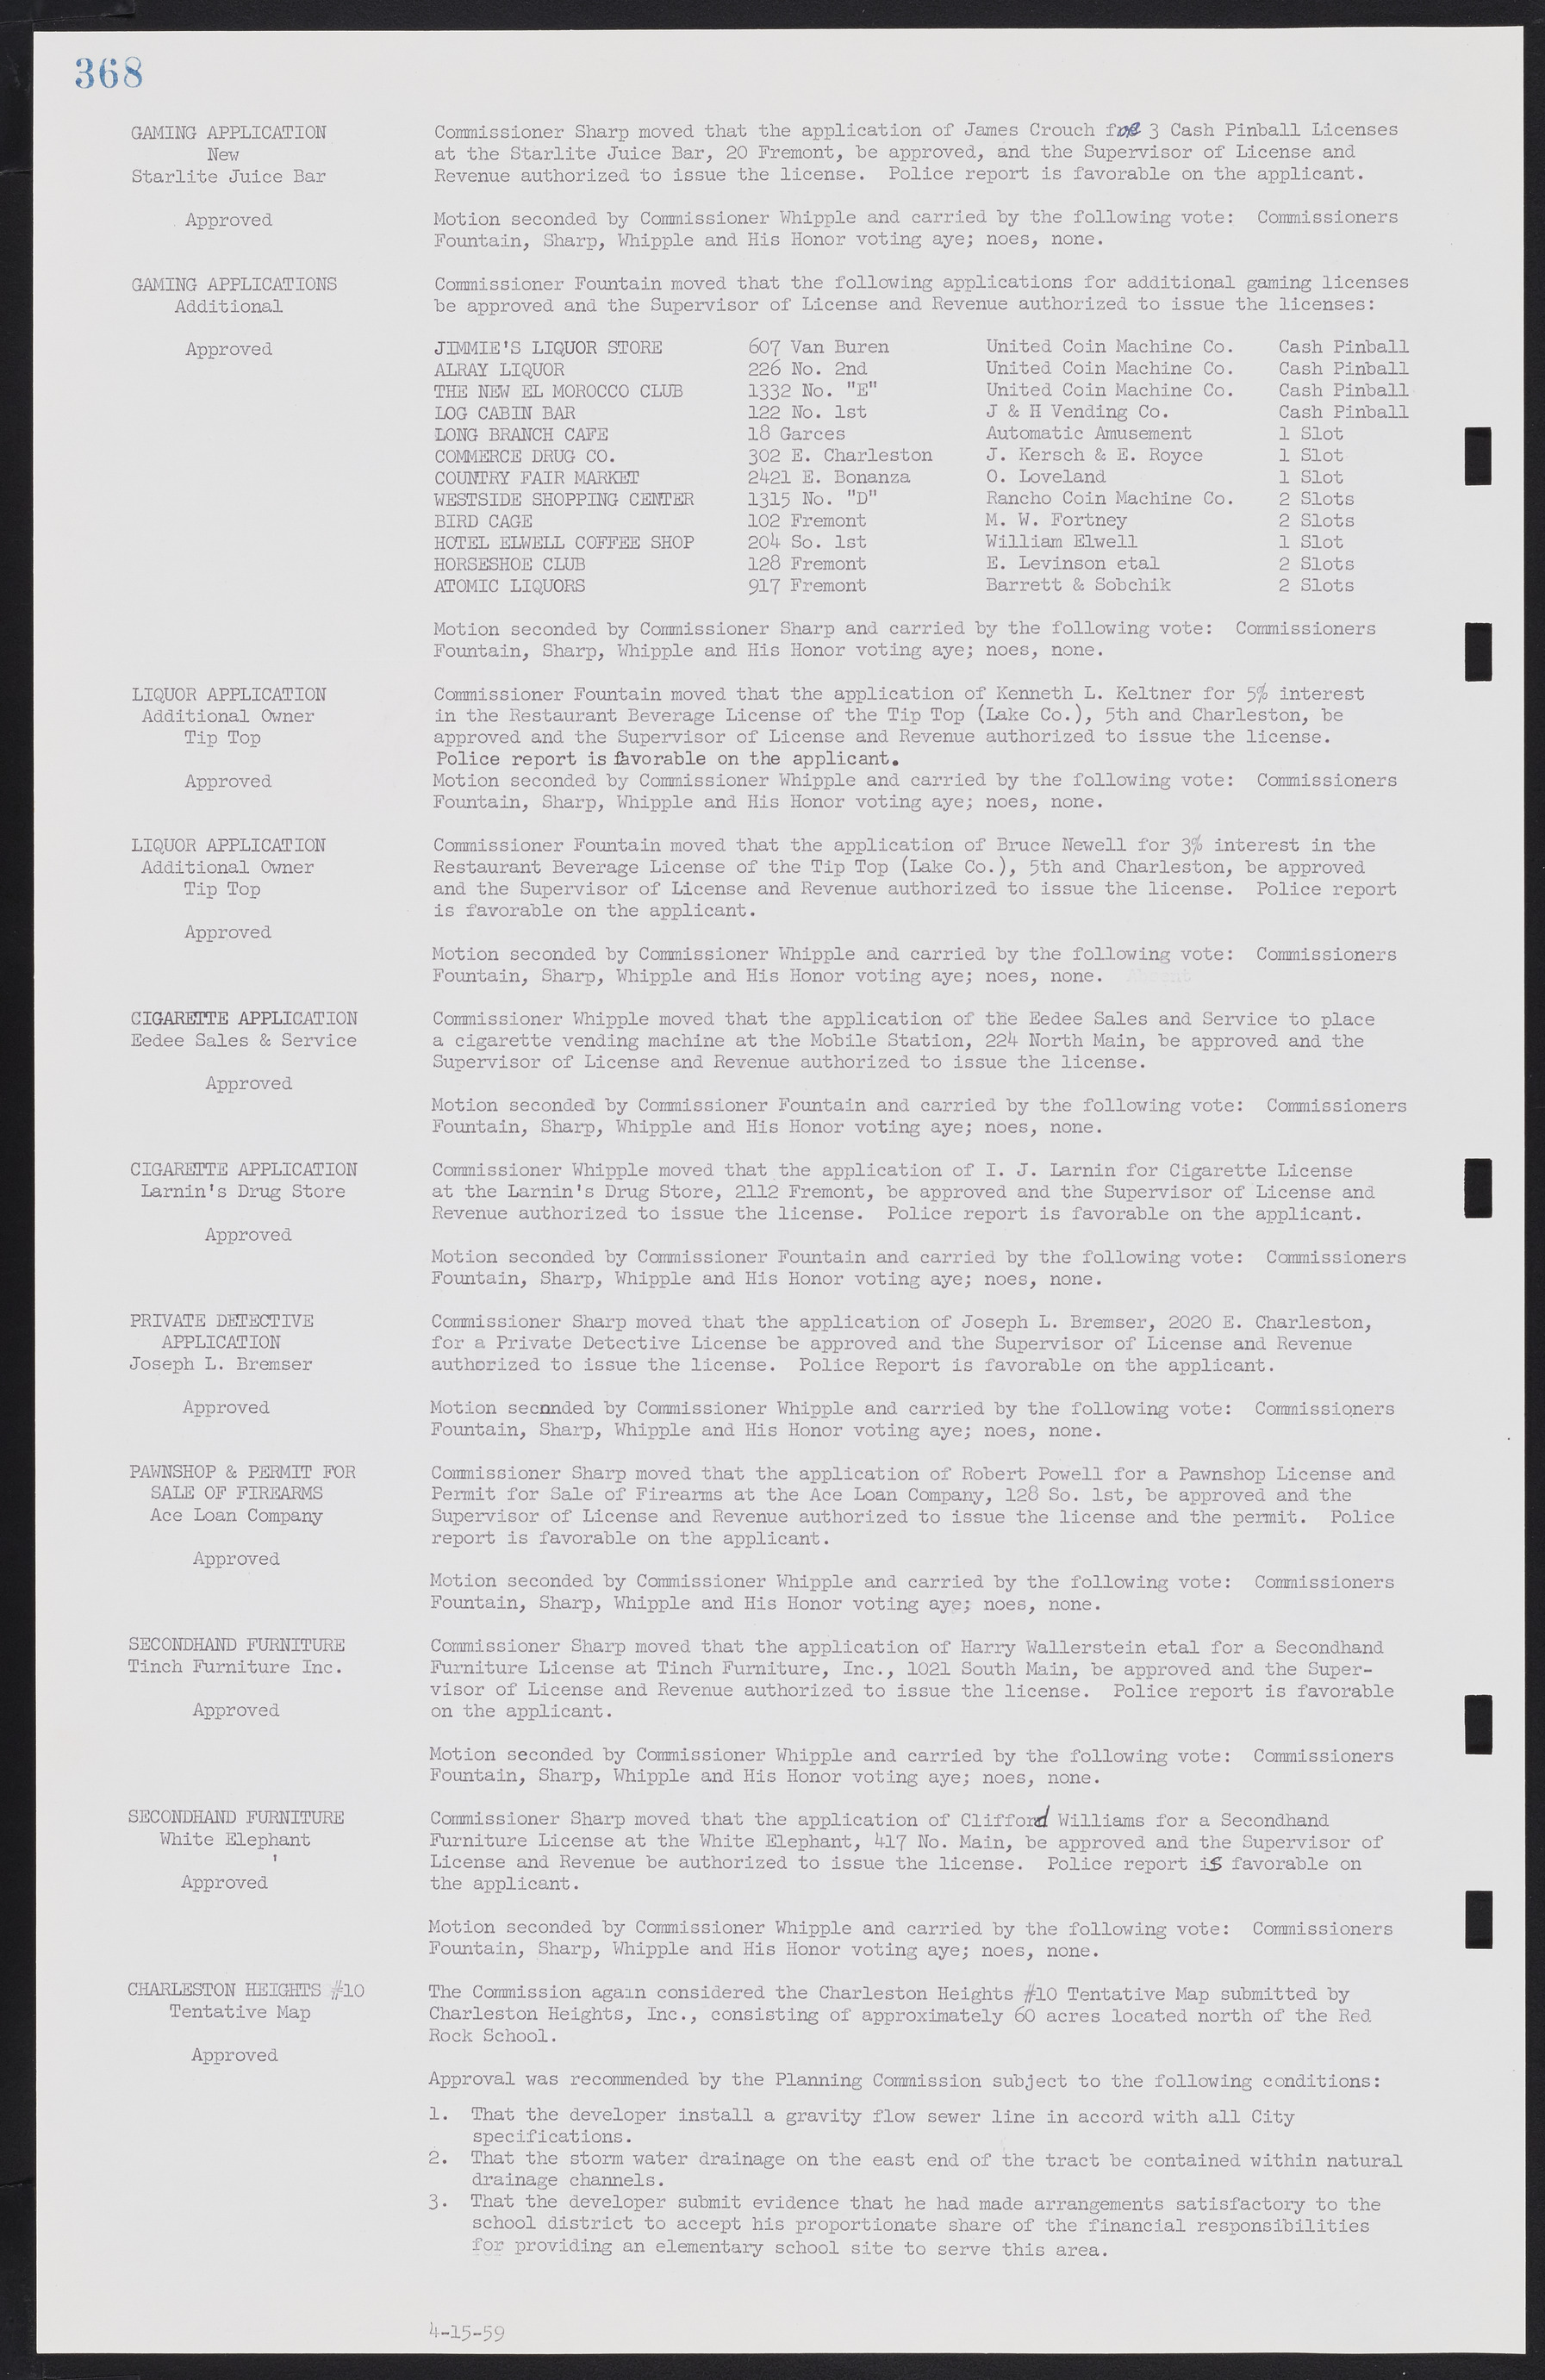 Las Vegas City Commission Minutes, November 20, 1957 to December 2, 1959, lvc000011-404